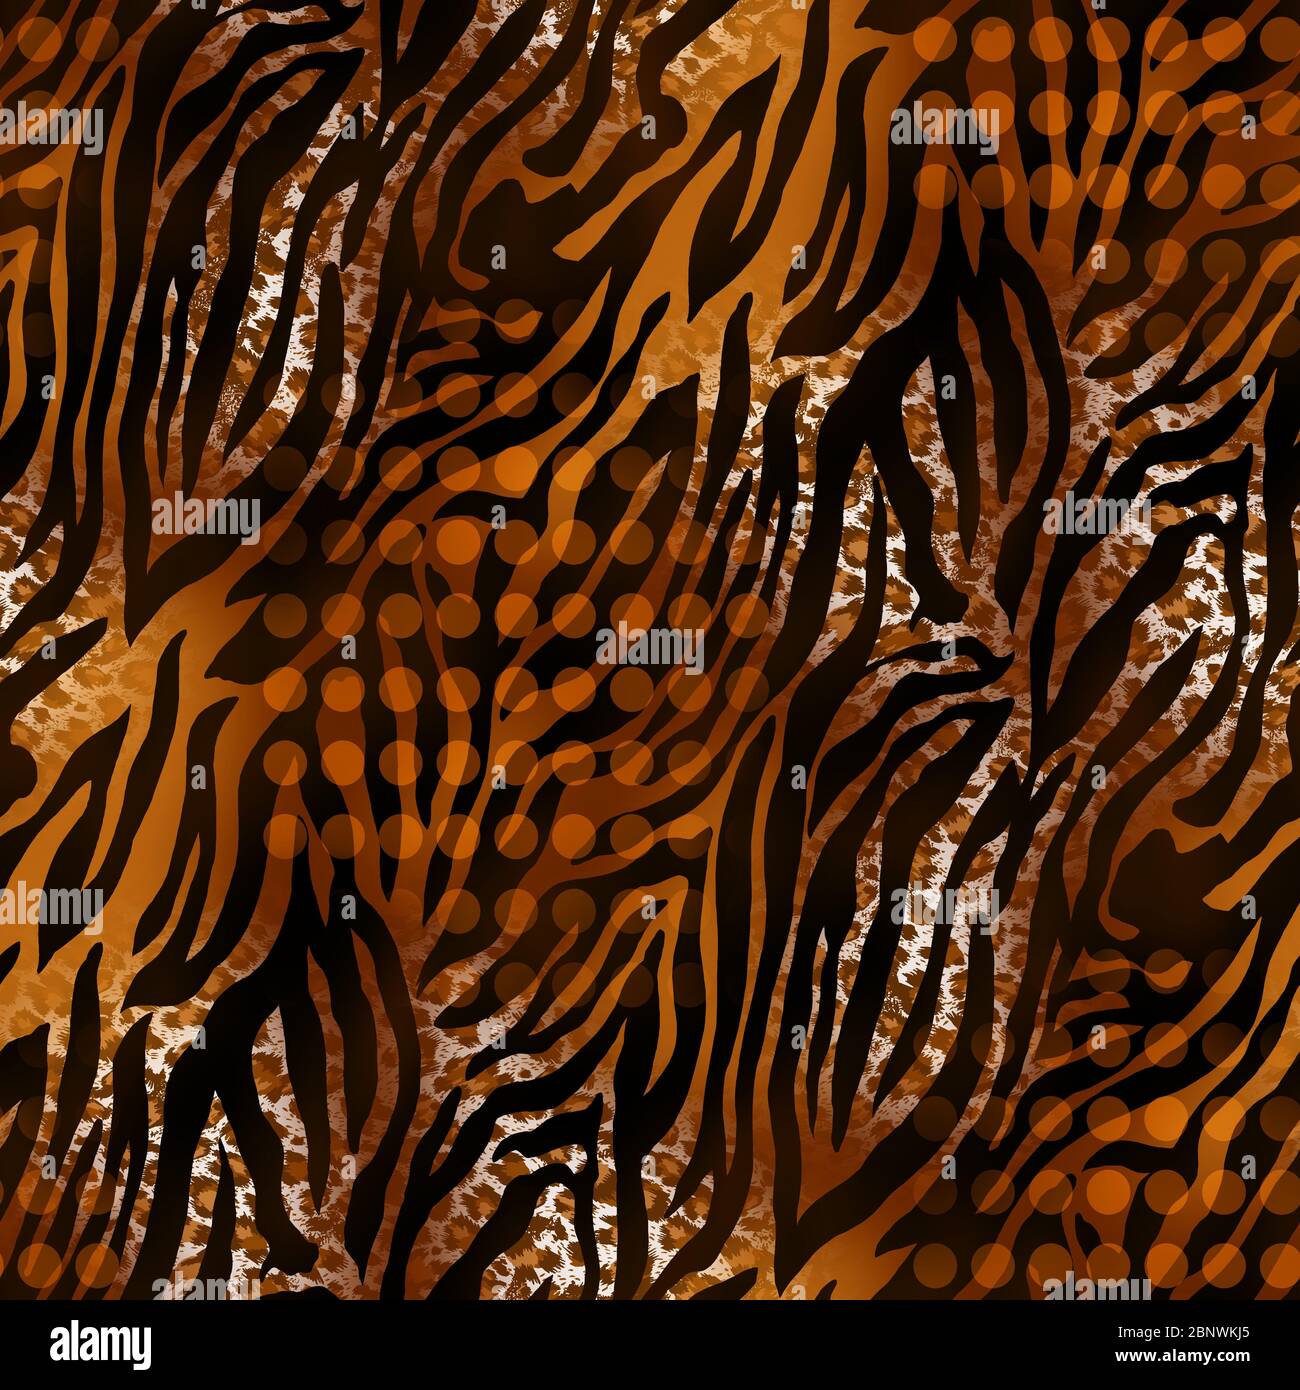 Seamless tiger pattern. Wild dark brown repeating texture. wallpaper, fashion textile background. orange stripe repeated jungle safari skin. Stock Photo